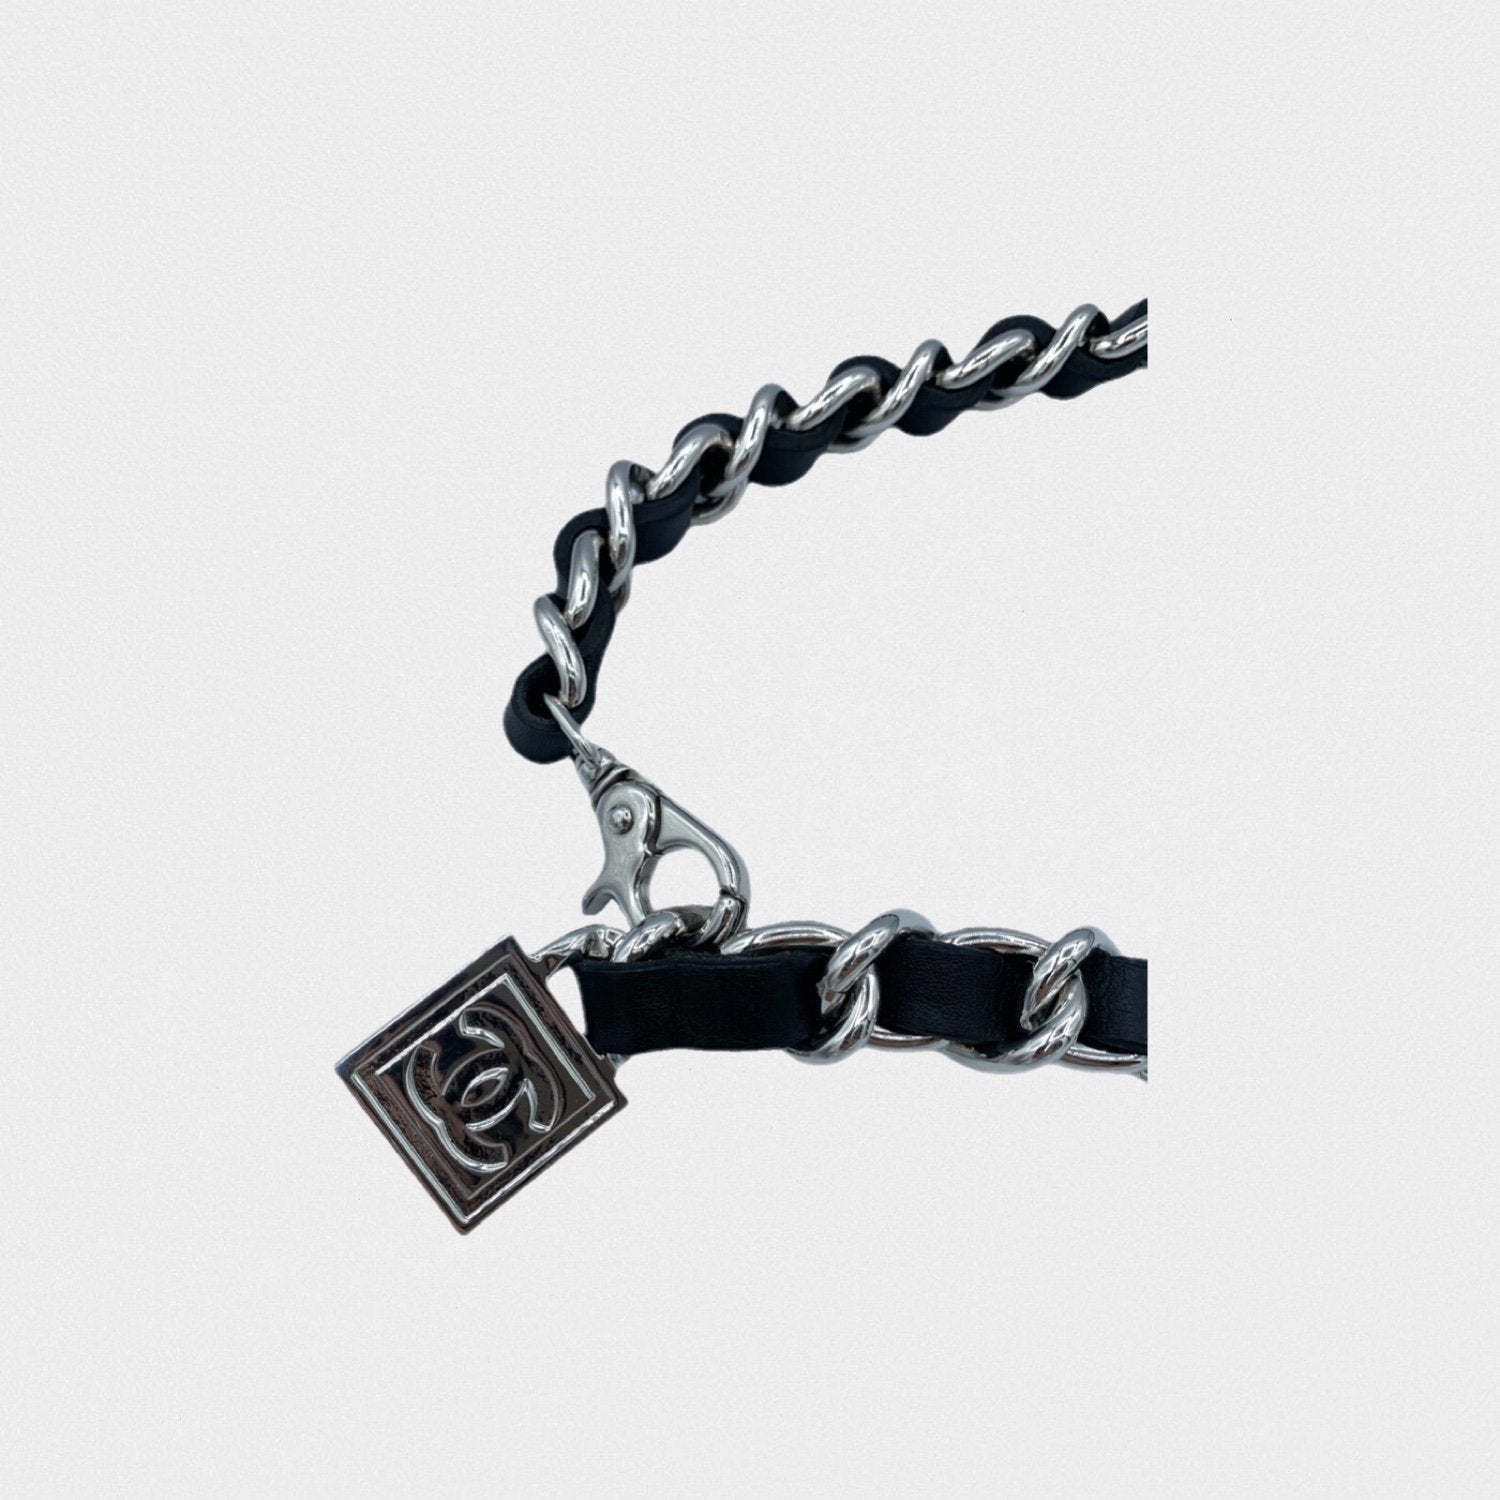 Lysis vintage Chanel chain belt - 2010s